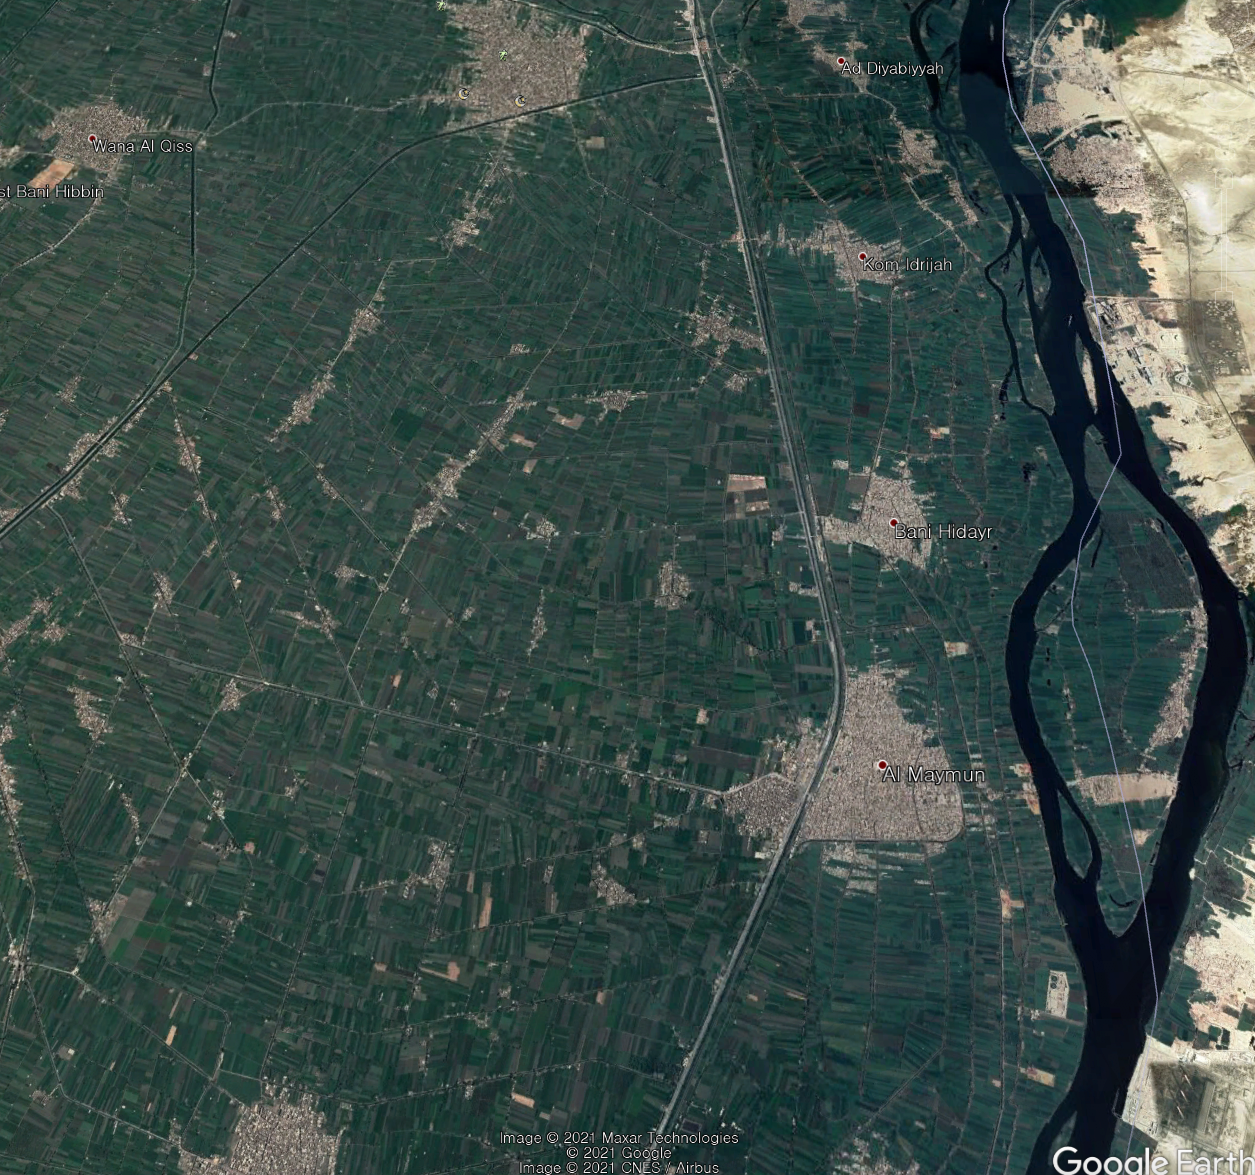 image.png 구글어스로 본 이집트 나일강의 위엄